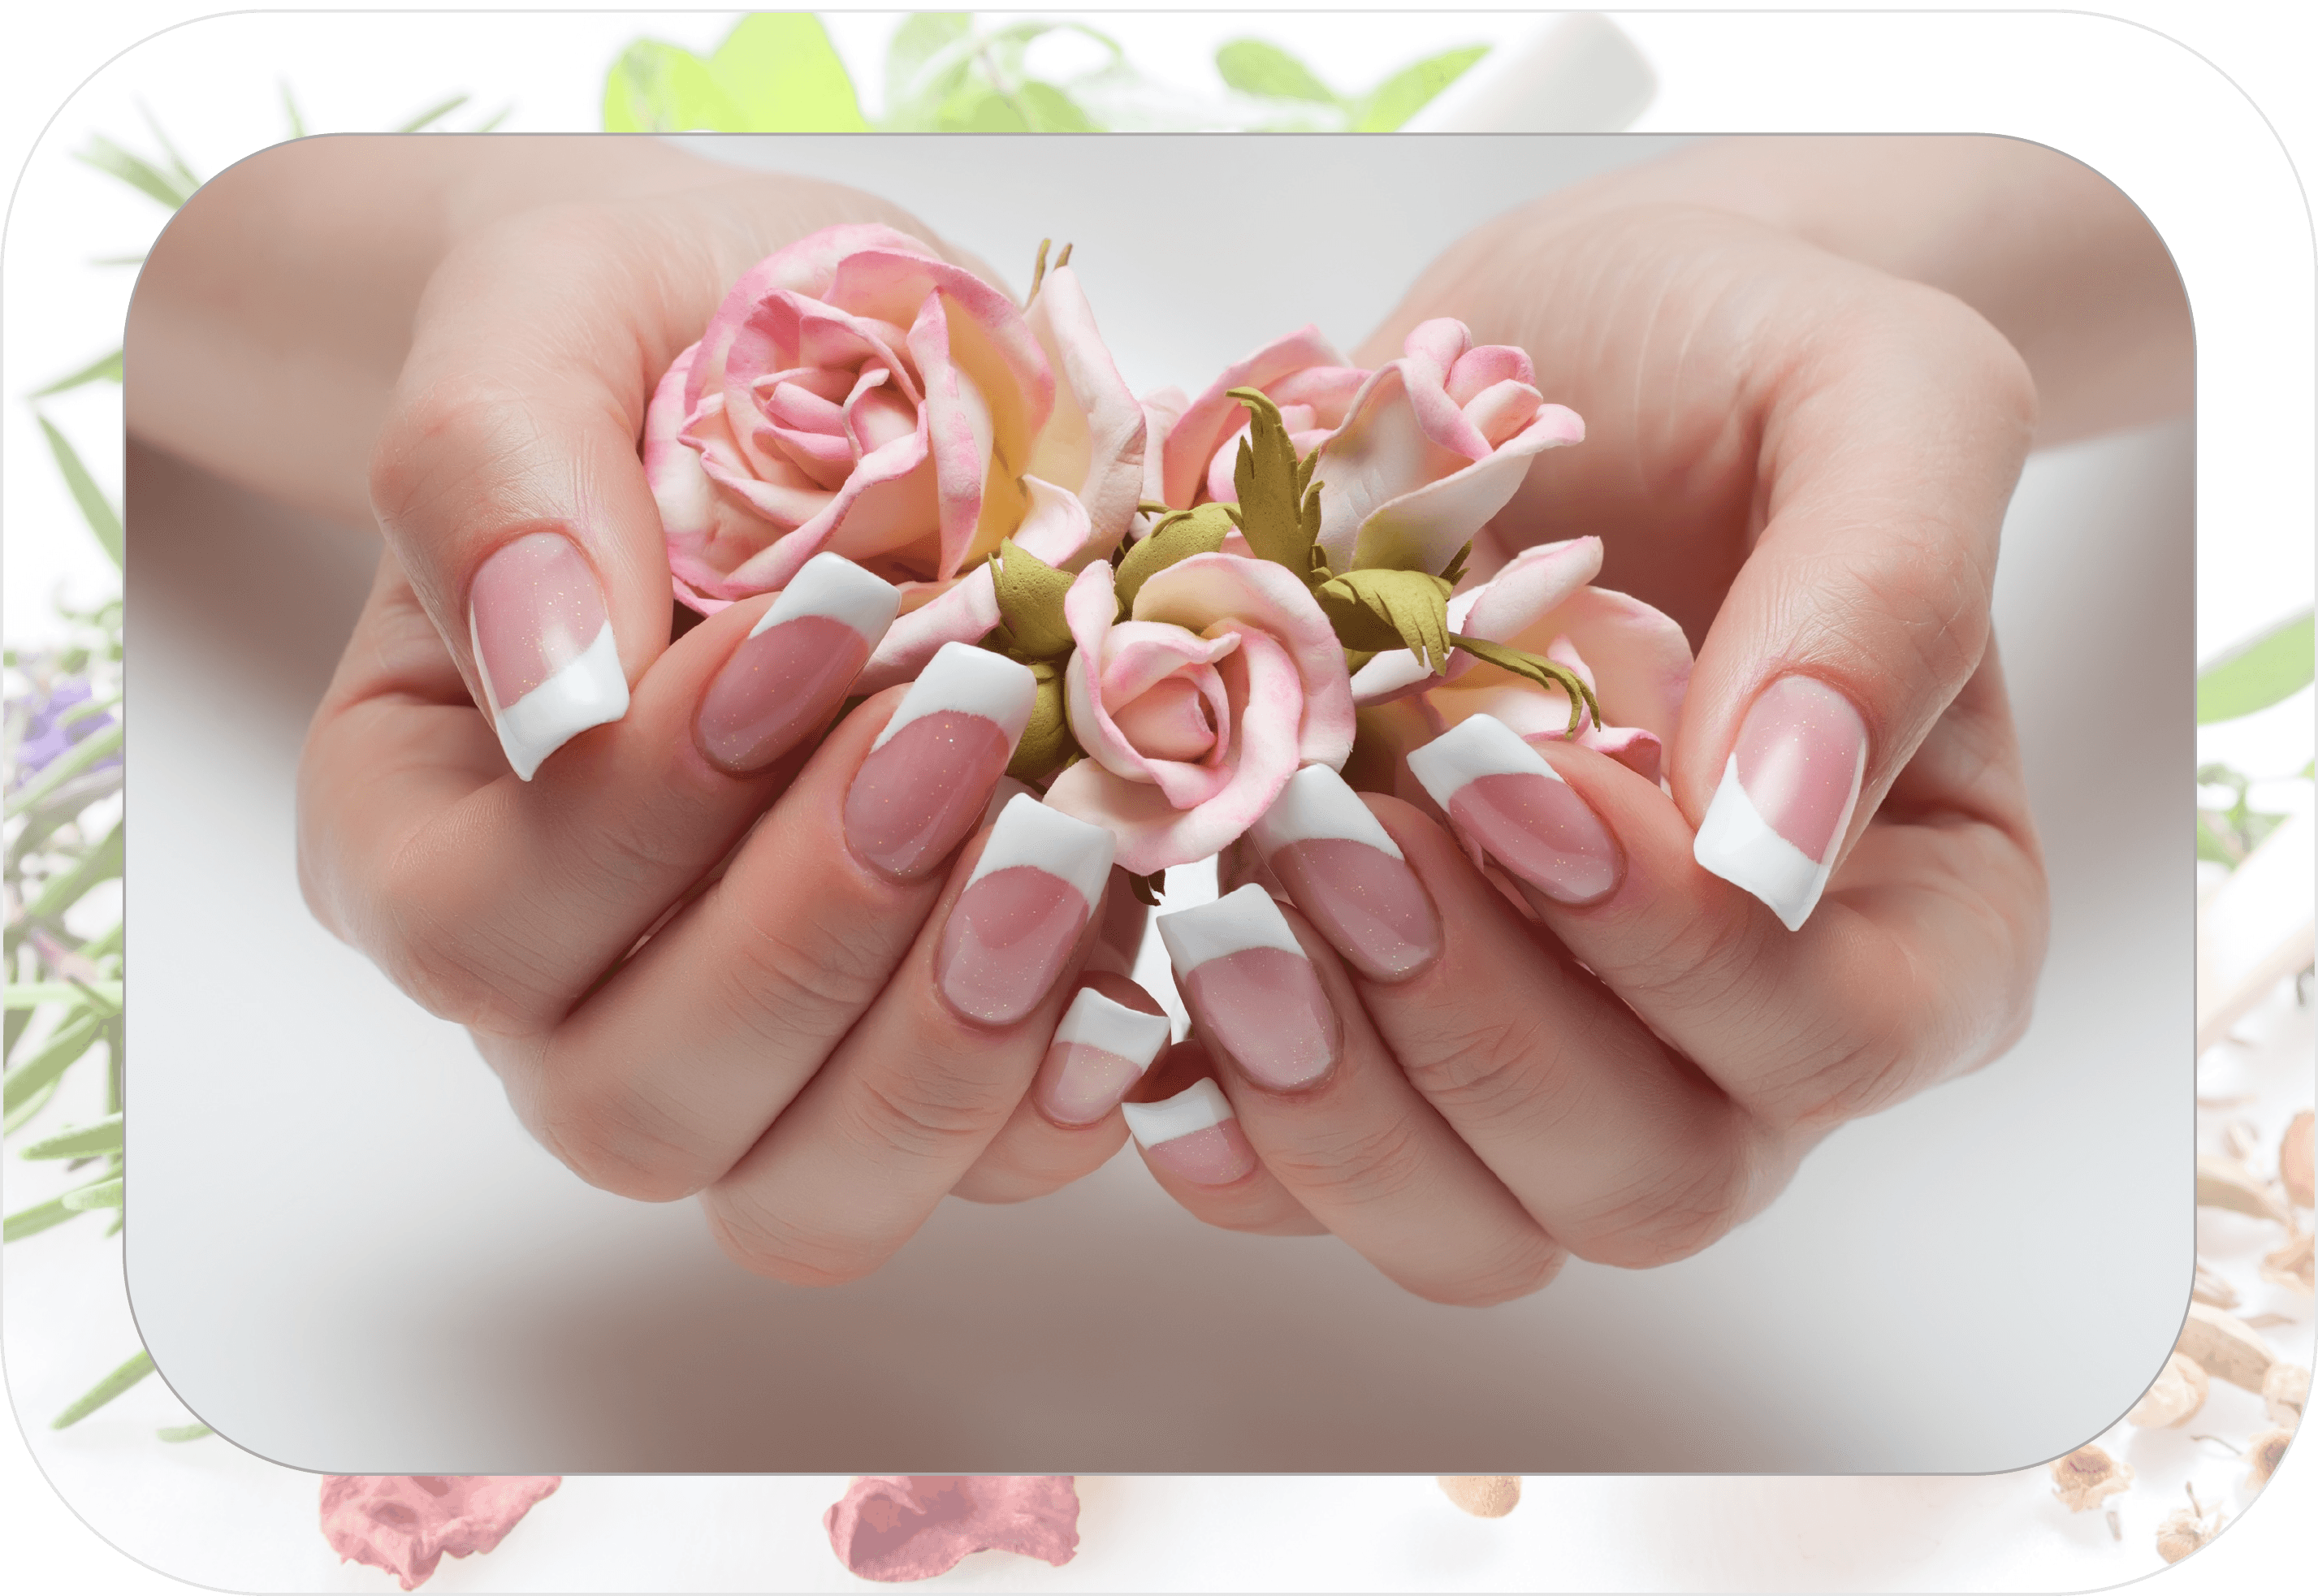 Nails clipart clean nail. Acrylic salon